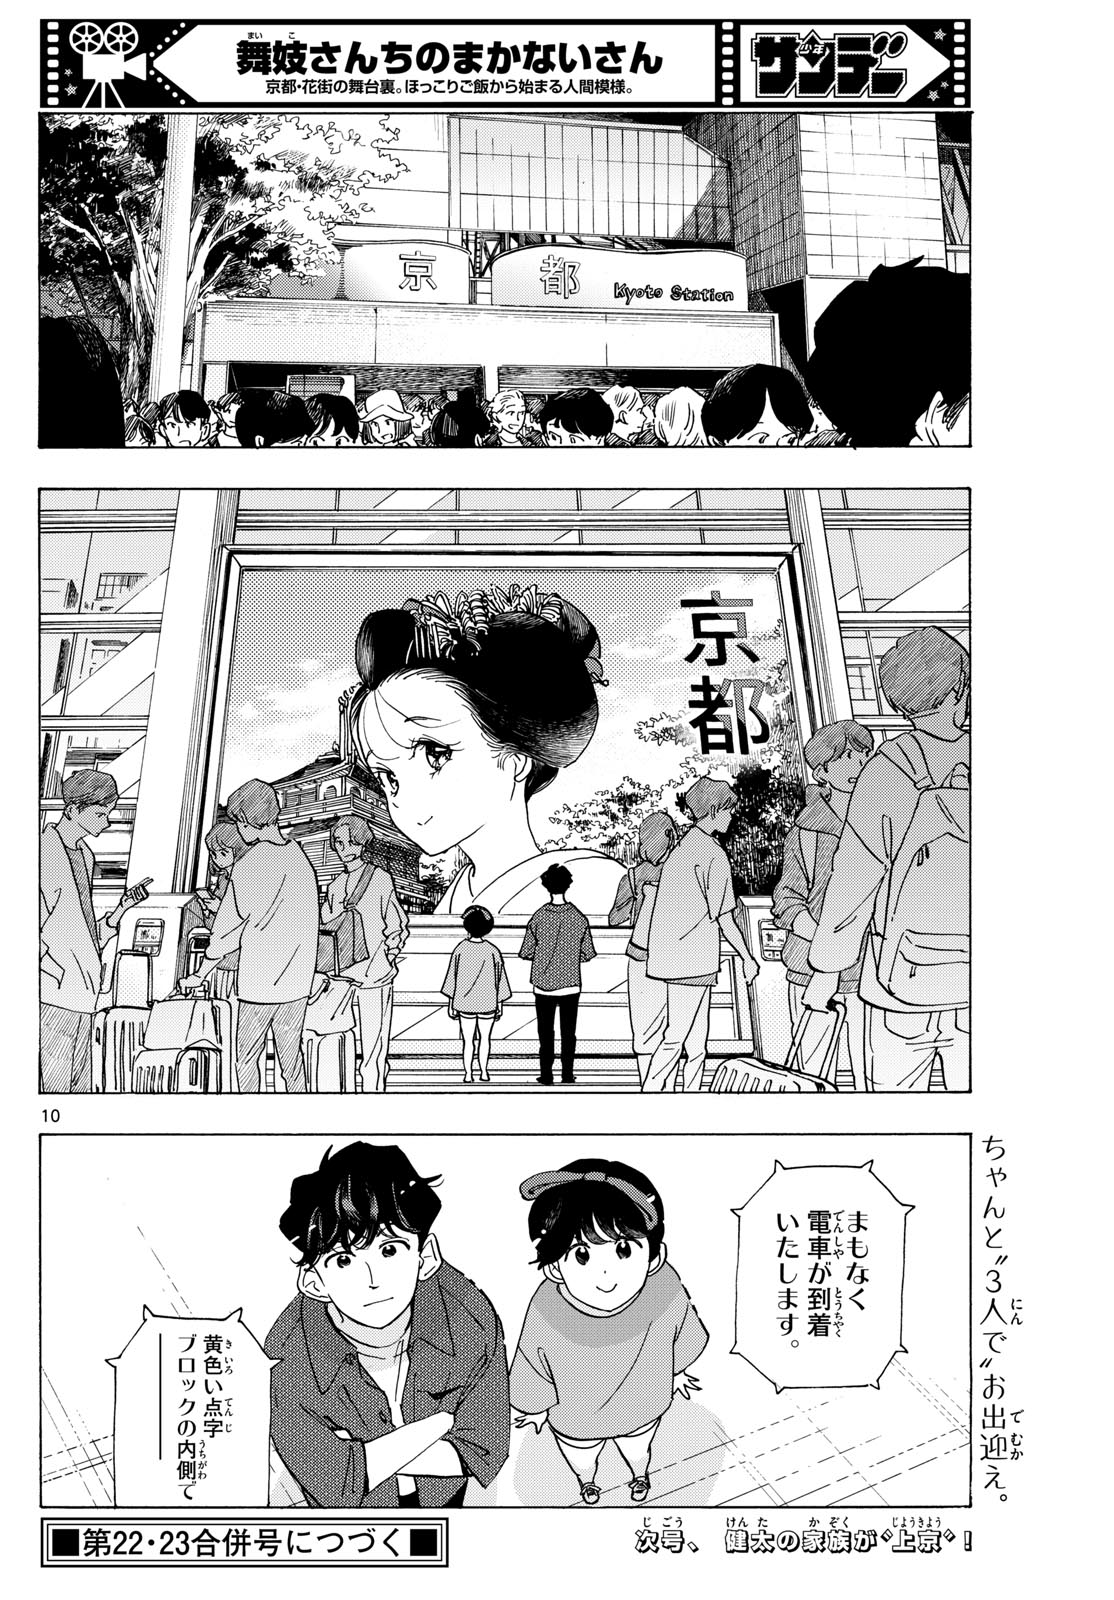 Maiko-san Chi no Makanai-san - Chapter 299 - Page 10